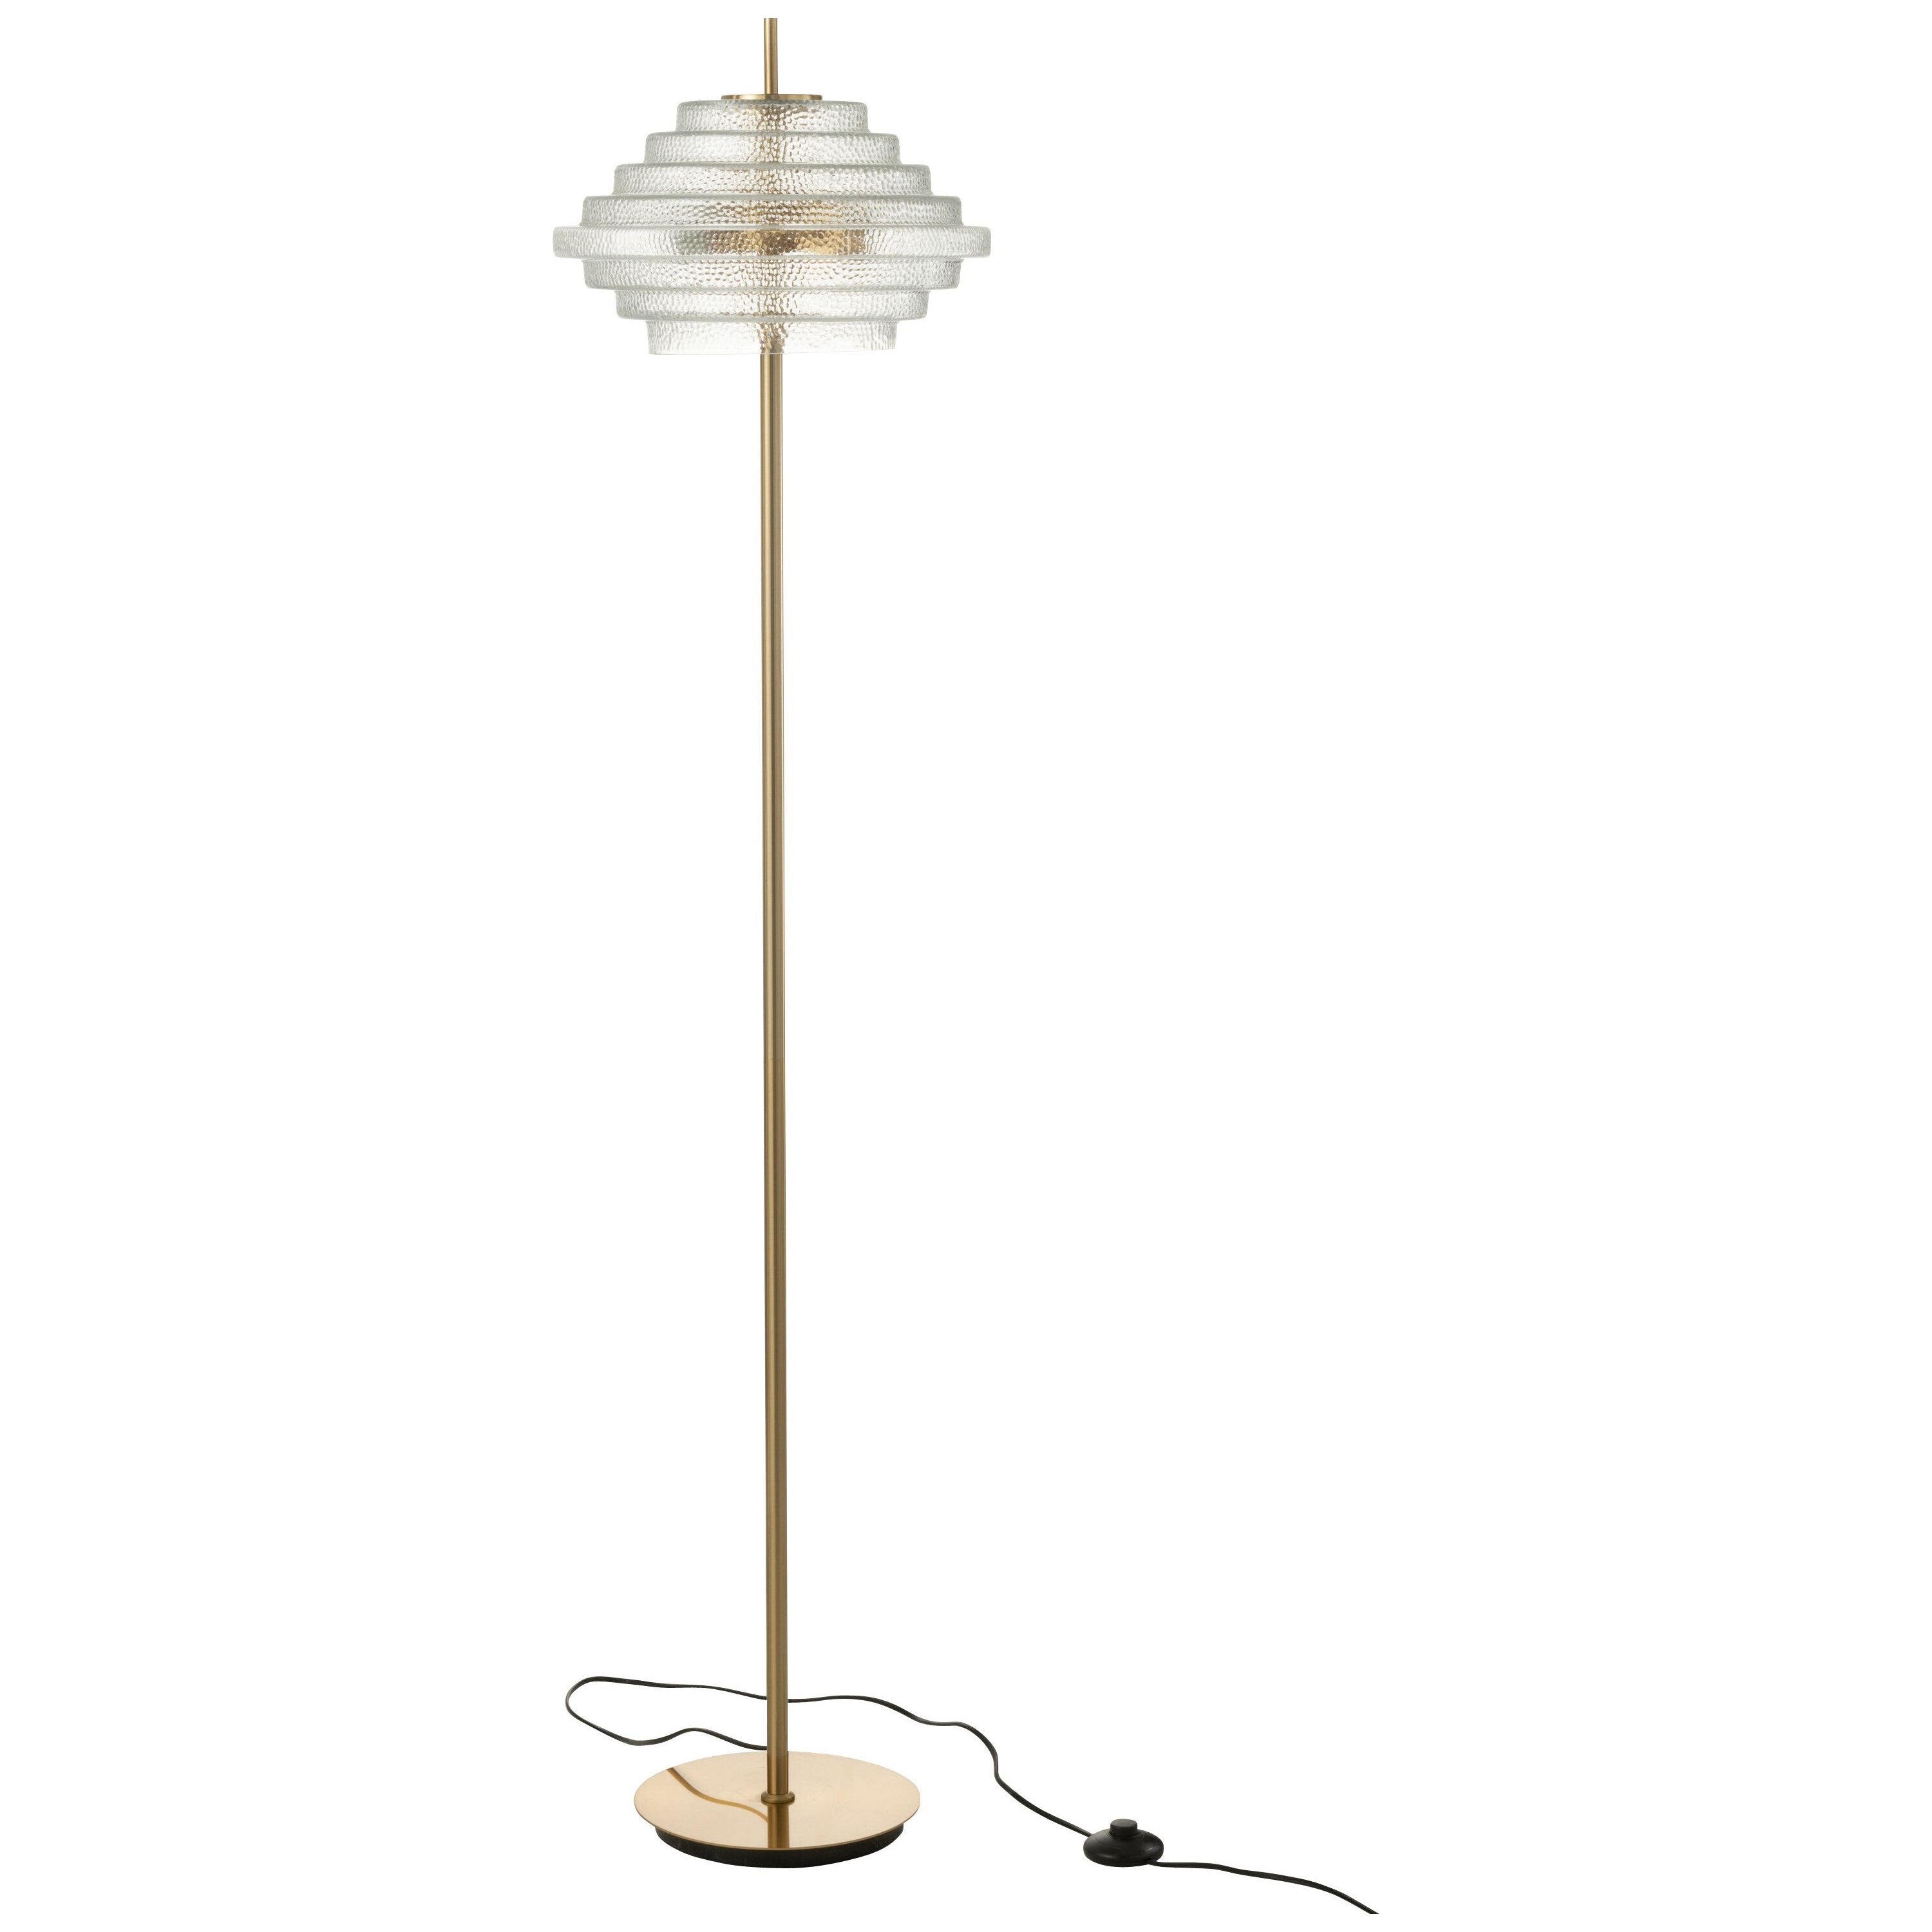 Foot lamp LED Gold Metal/glass Translucent